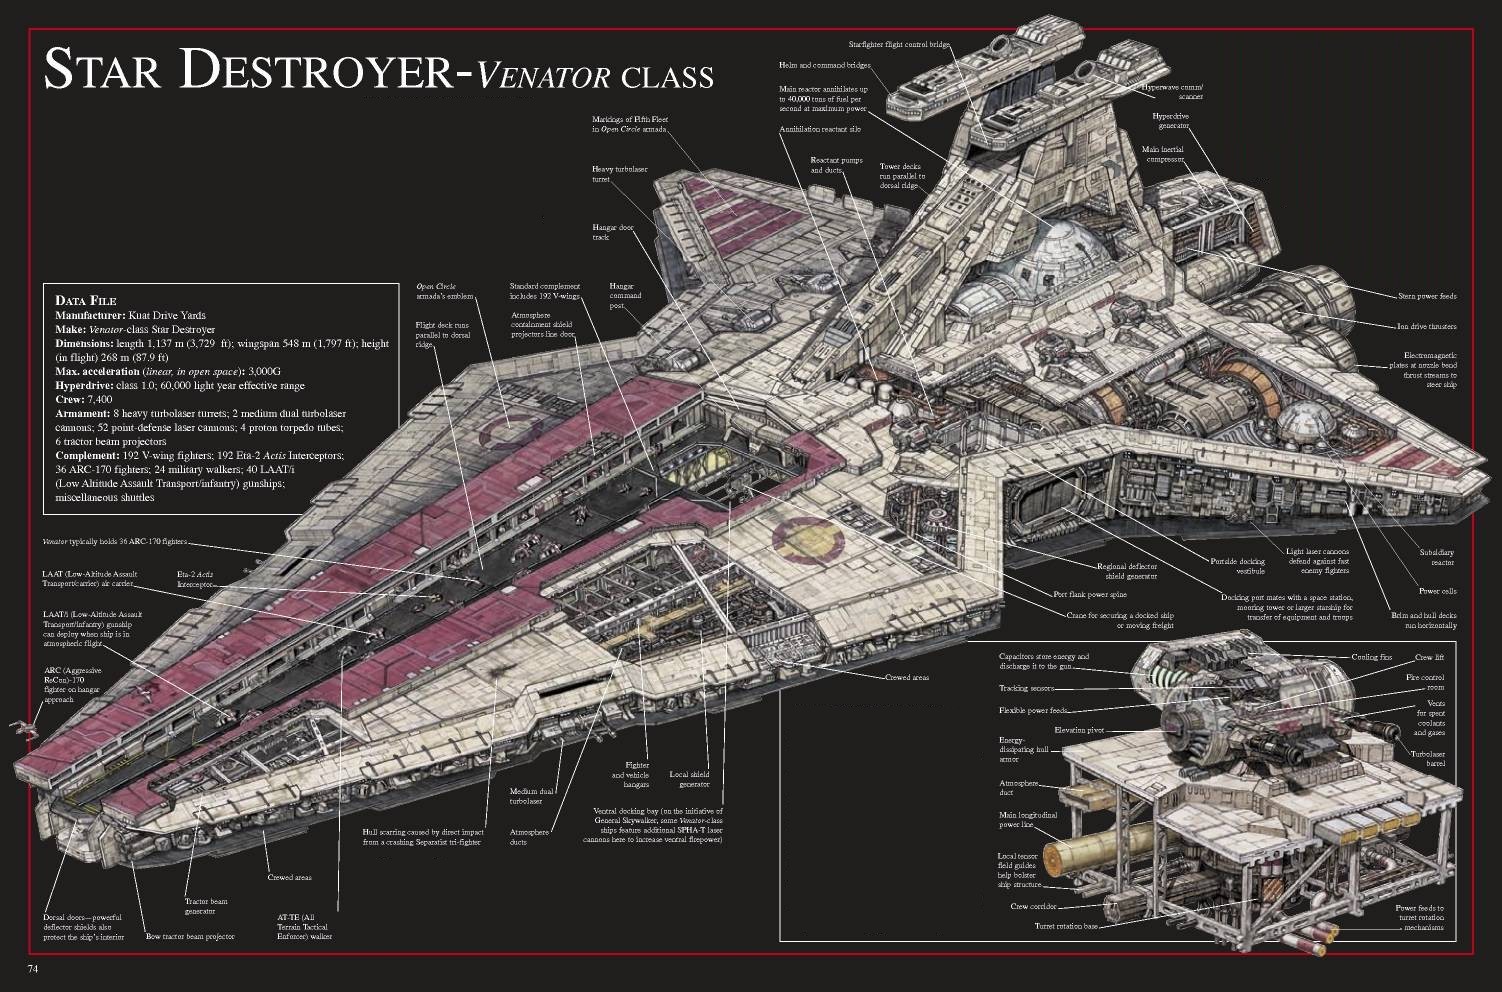 vindicator class star destroyer